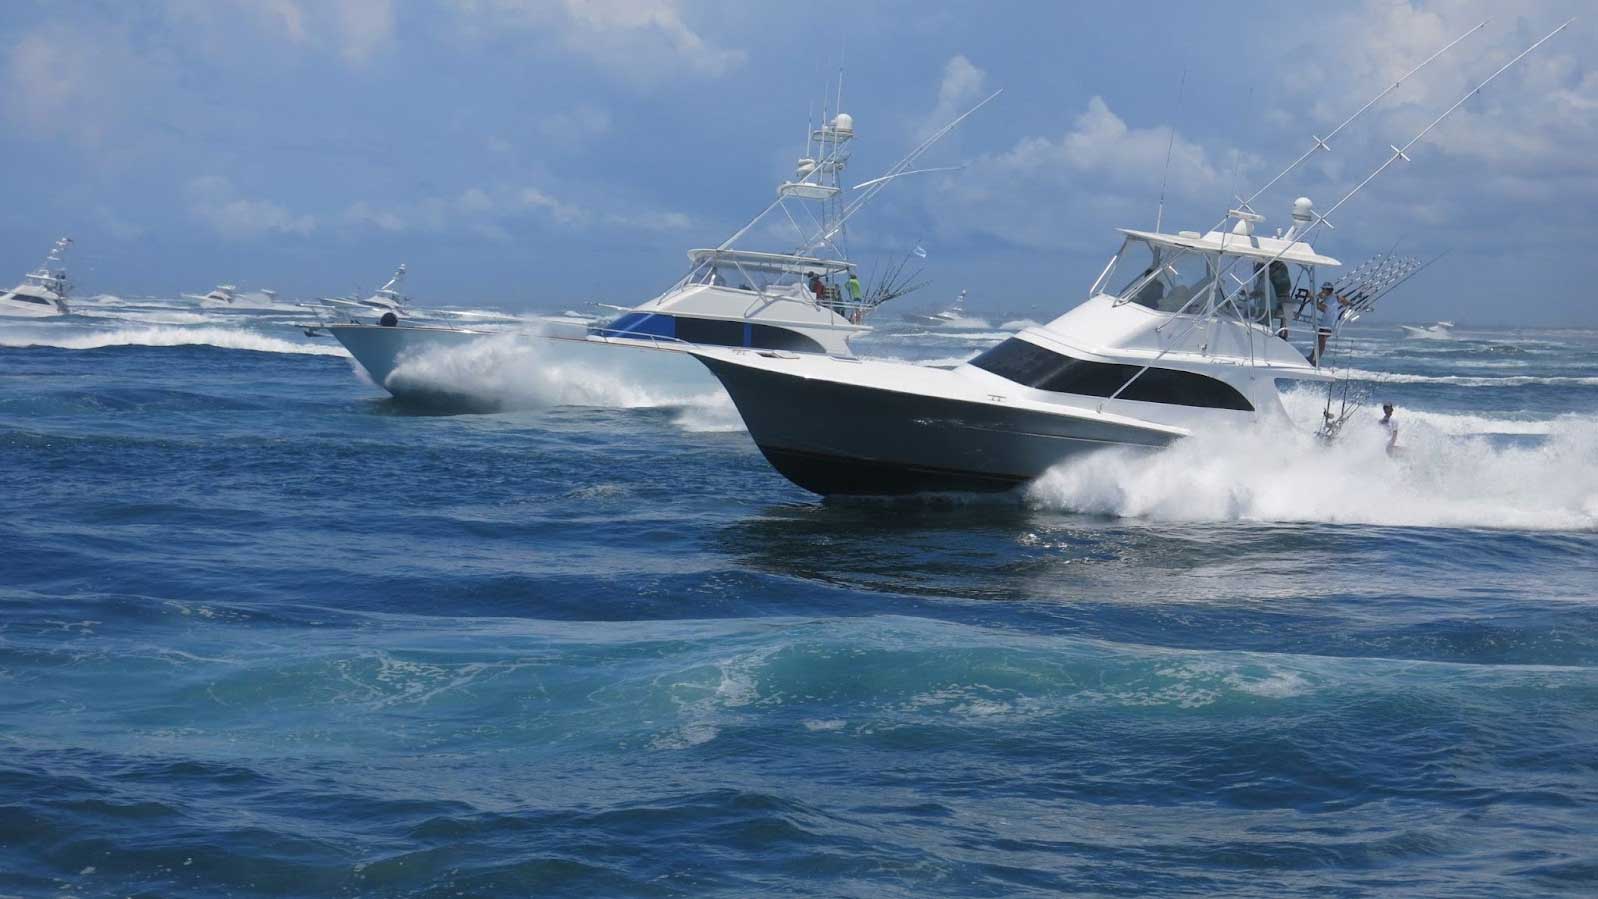 The ECBC draws multi-million dollar sport fishing yachts from all around the region.